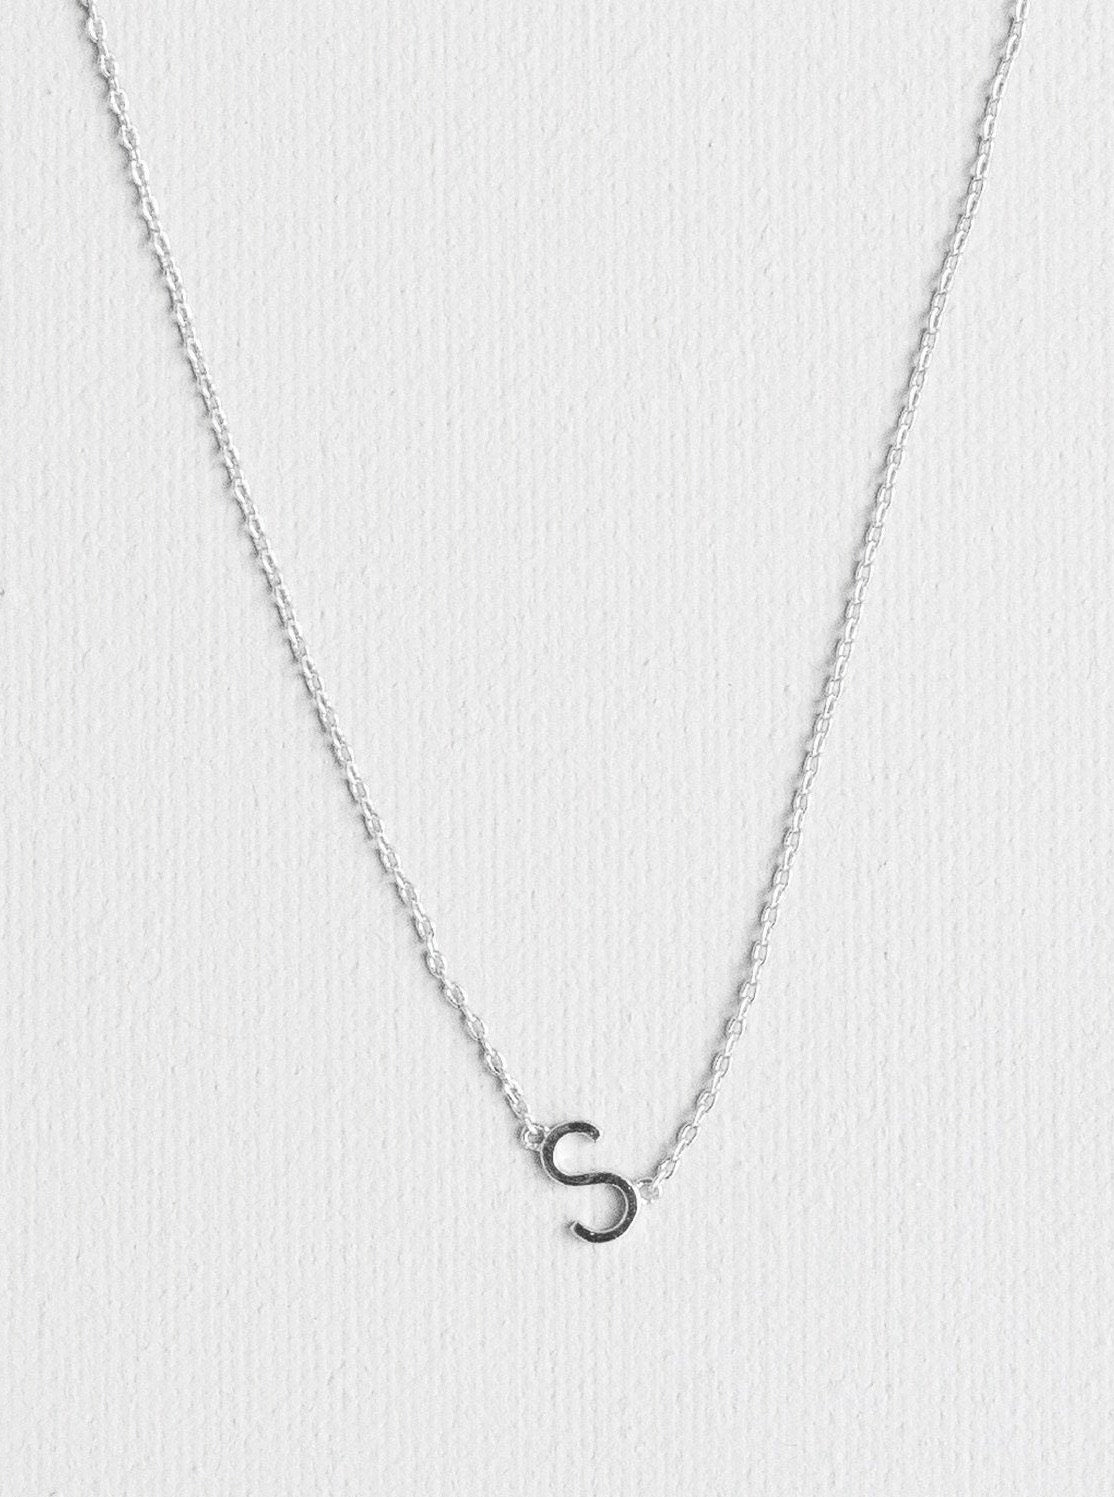 S letter necklace